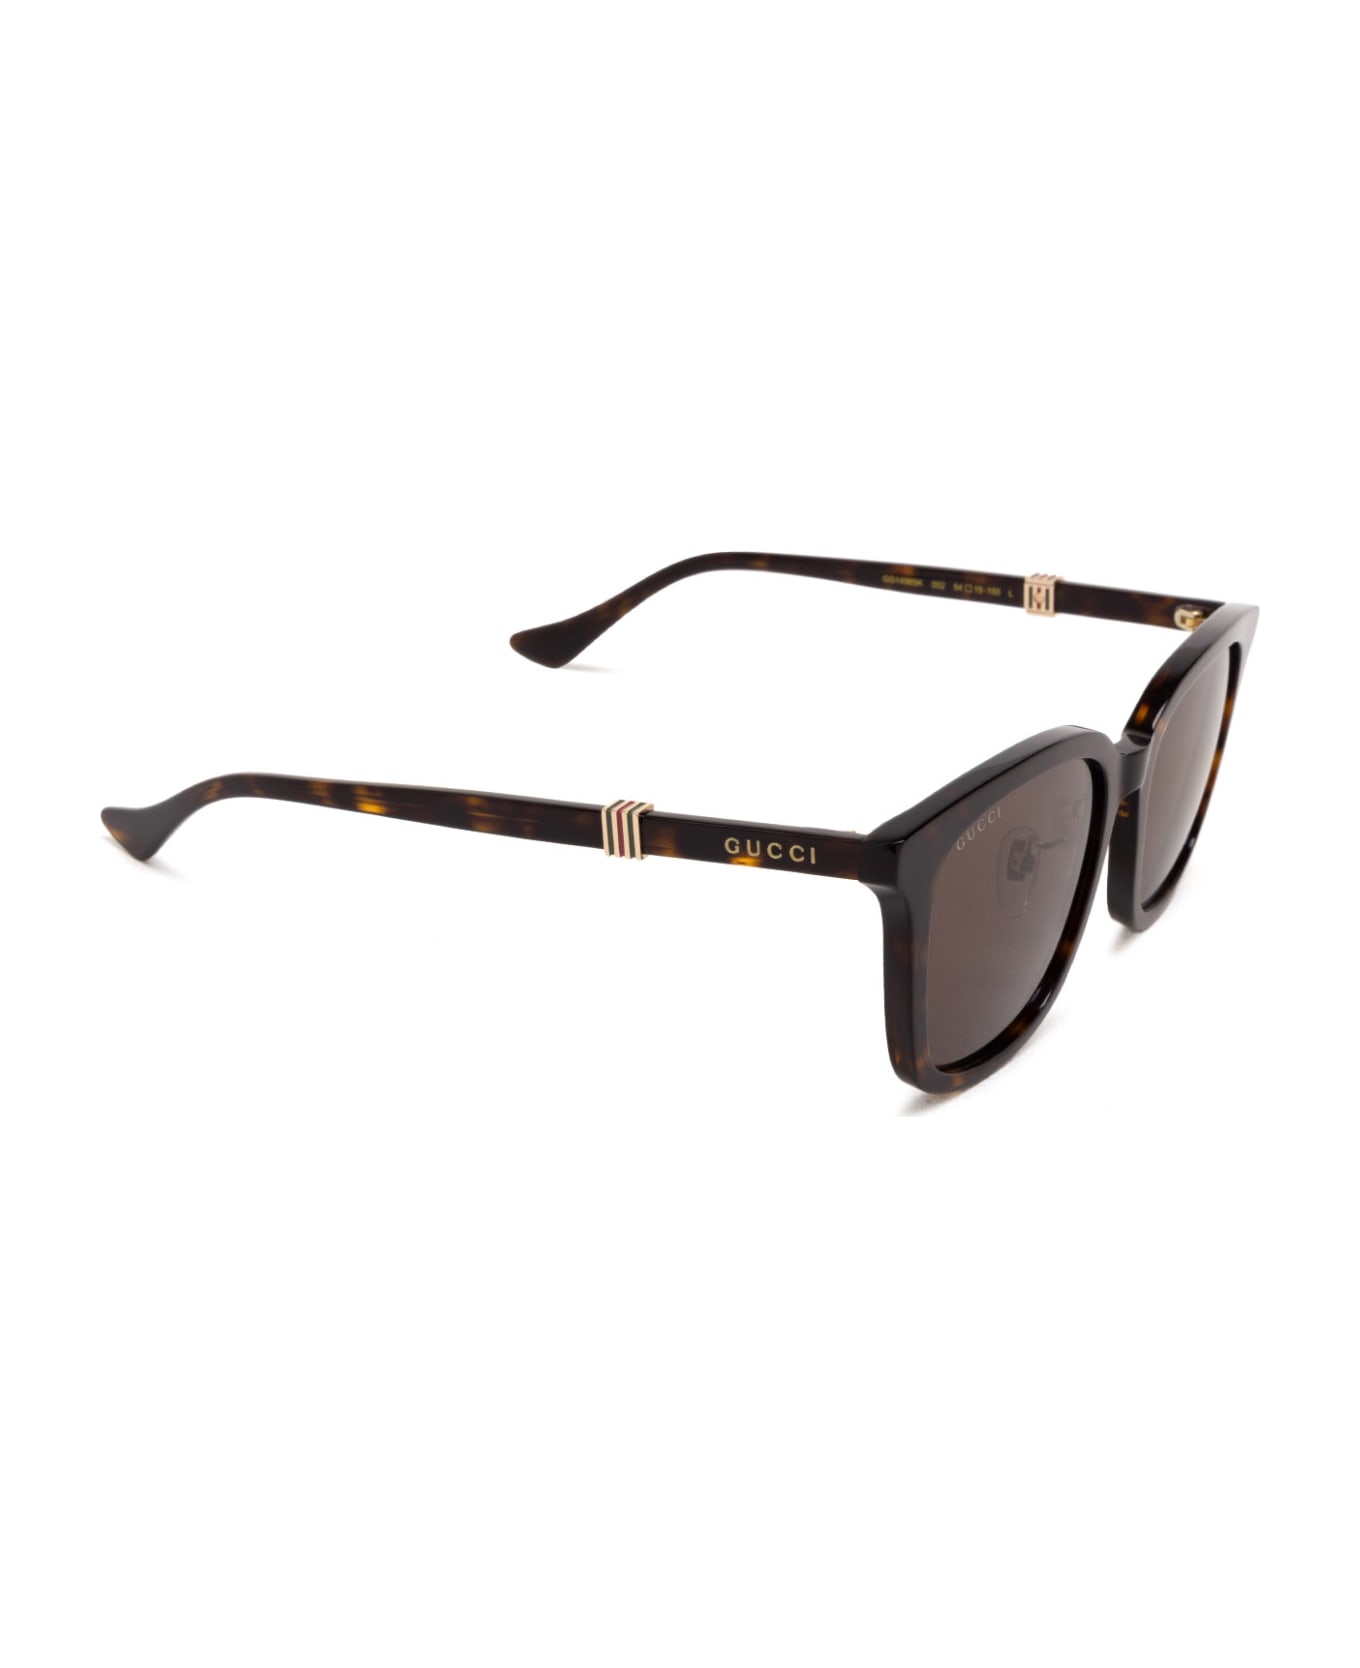 Gucci Eyewear Gg1498sk Havana Sunglasses - Havana サングラス